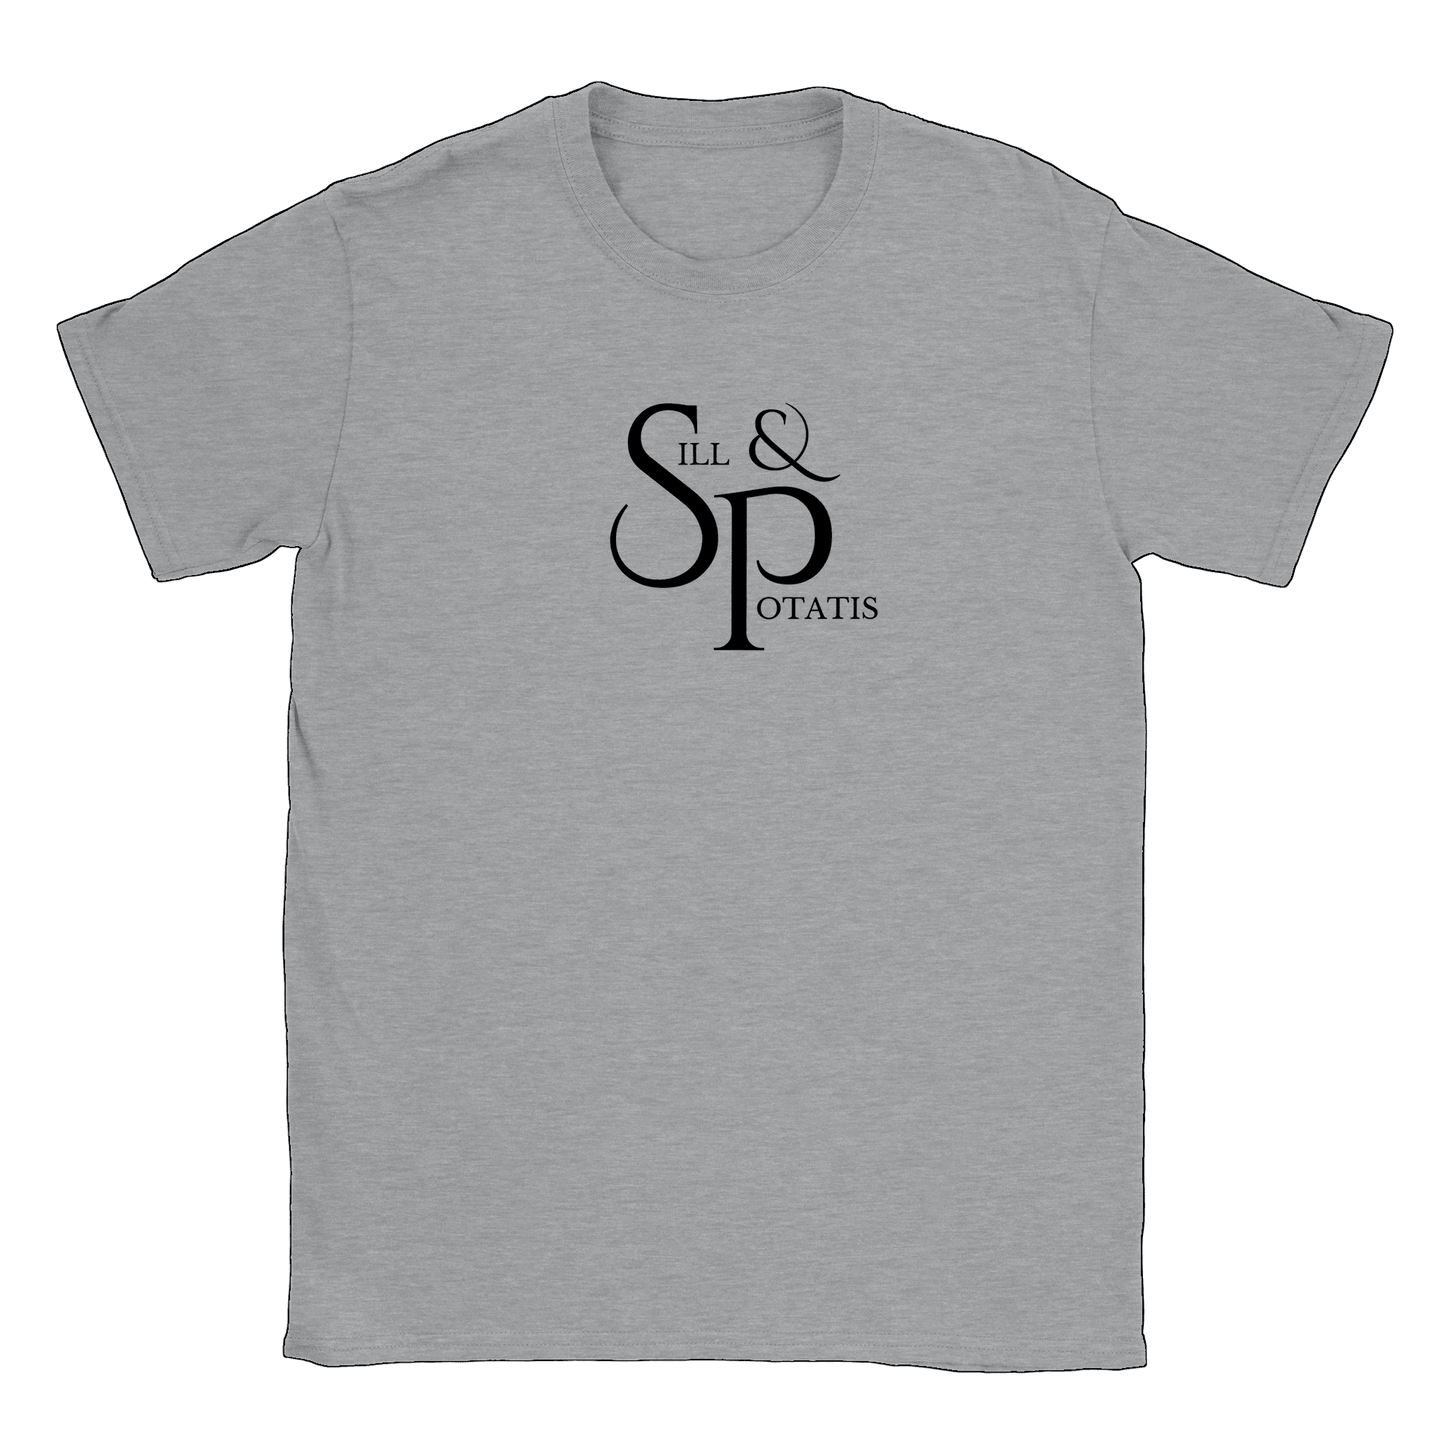 Sill och Potatis - T-shirt Sports Grey